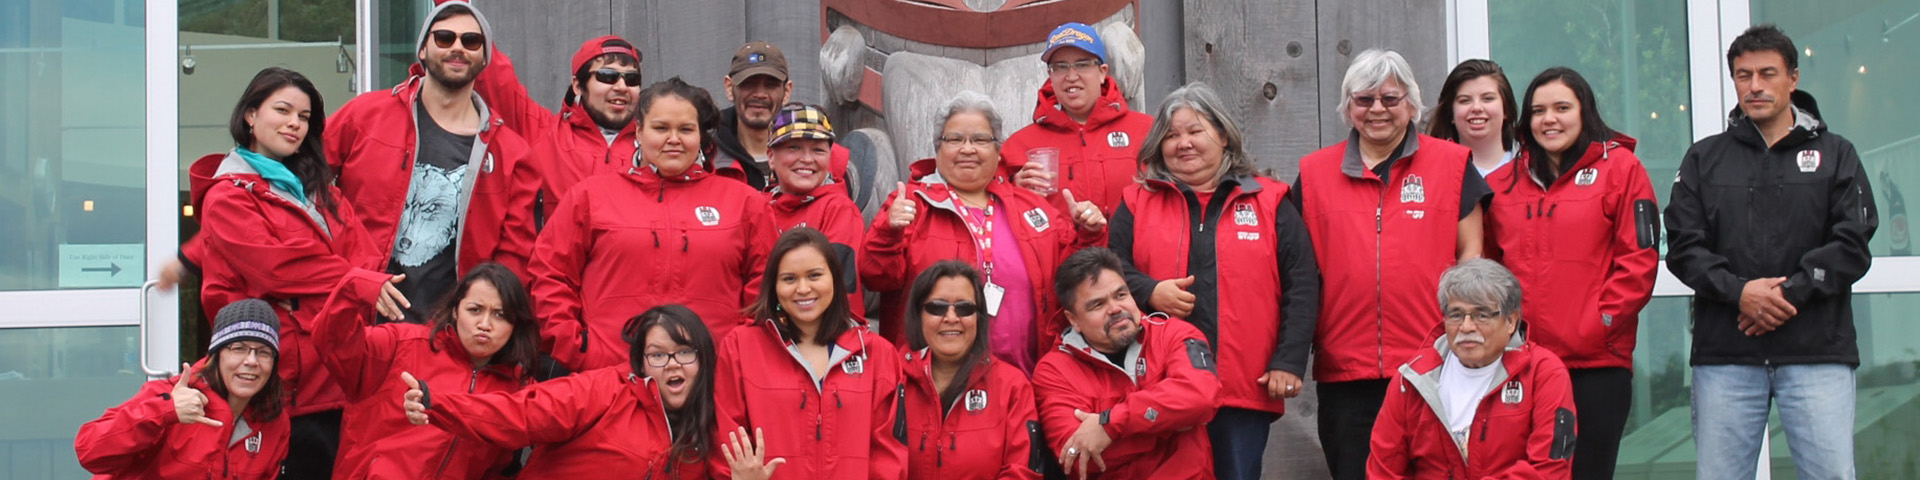 Group photo of the Haida Gwaii Watchmen